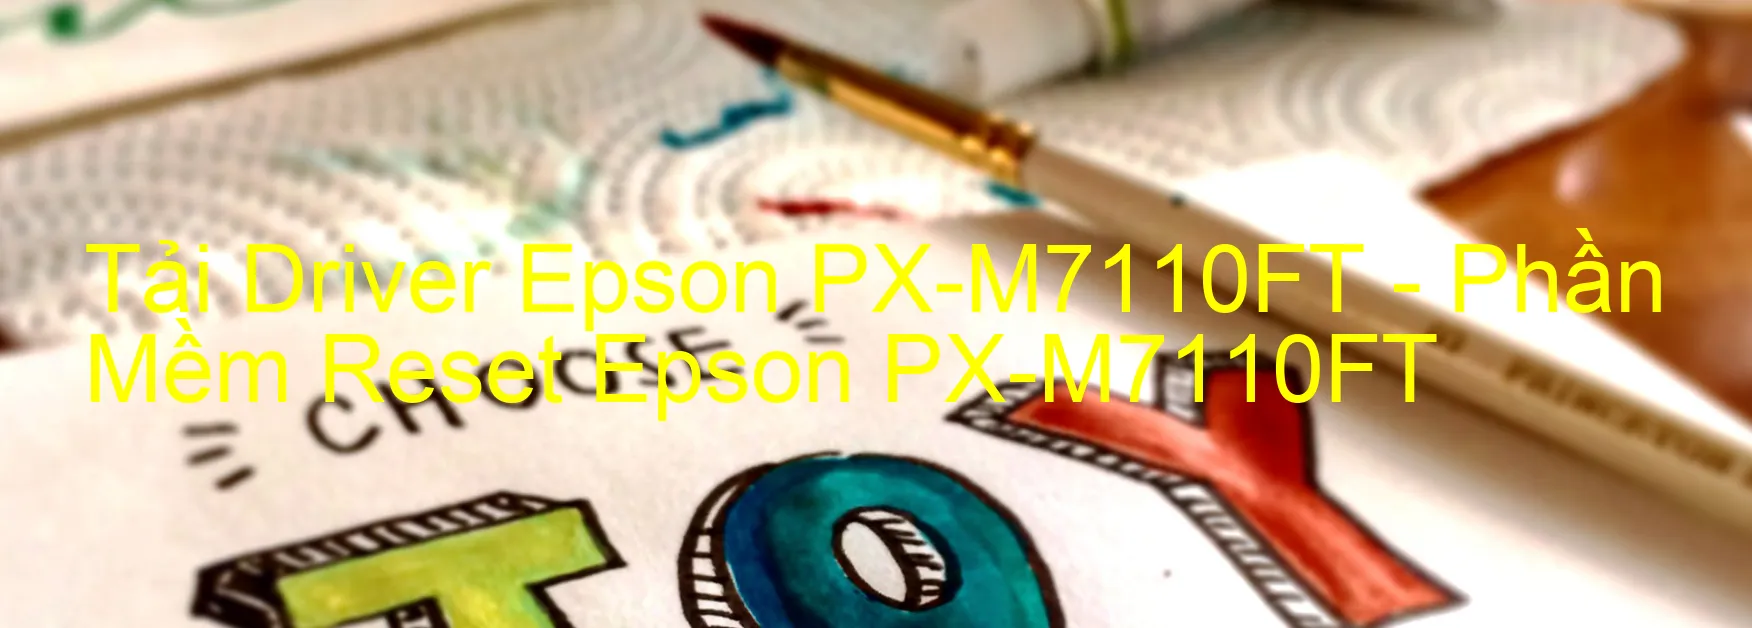 Driver Epson PX-M7110FT, Phần Mềm Reset Epson PX-M7110FT